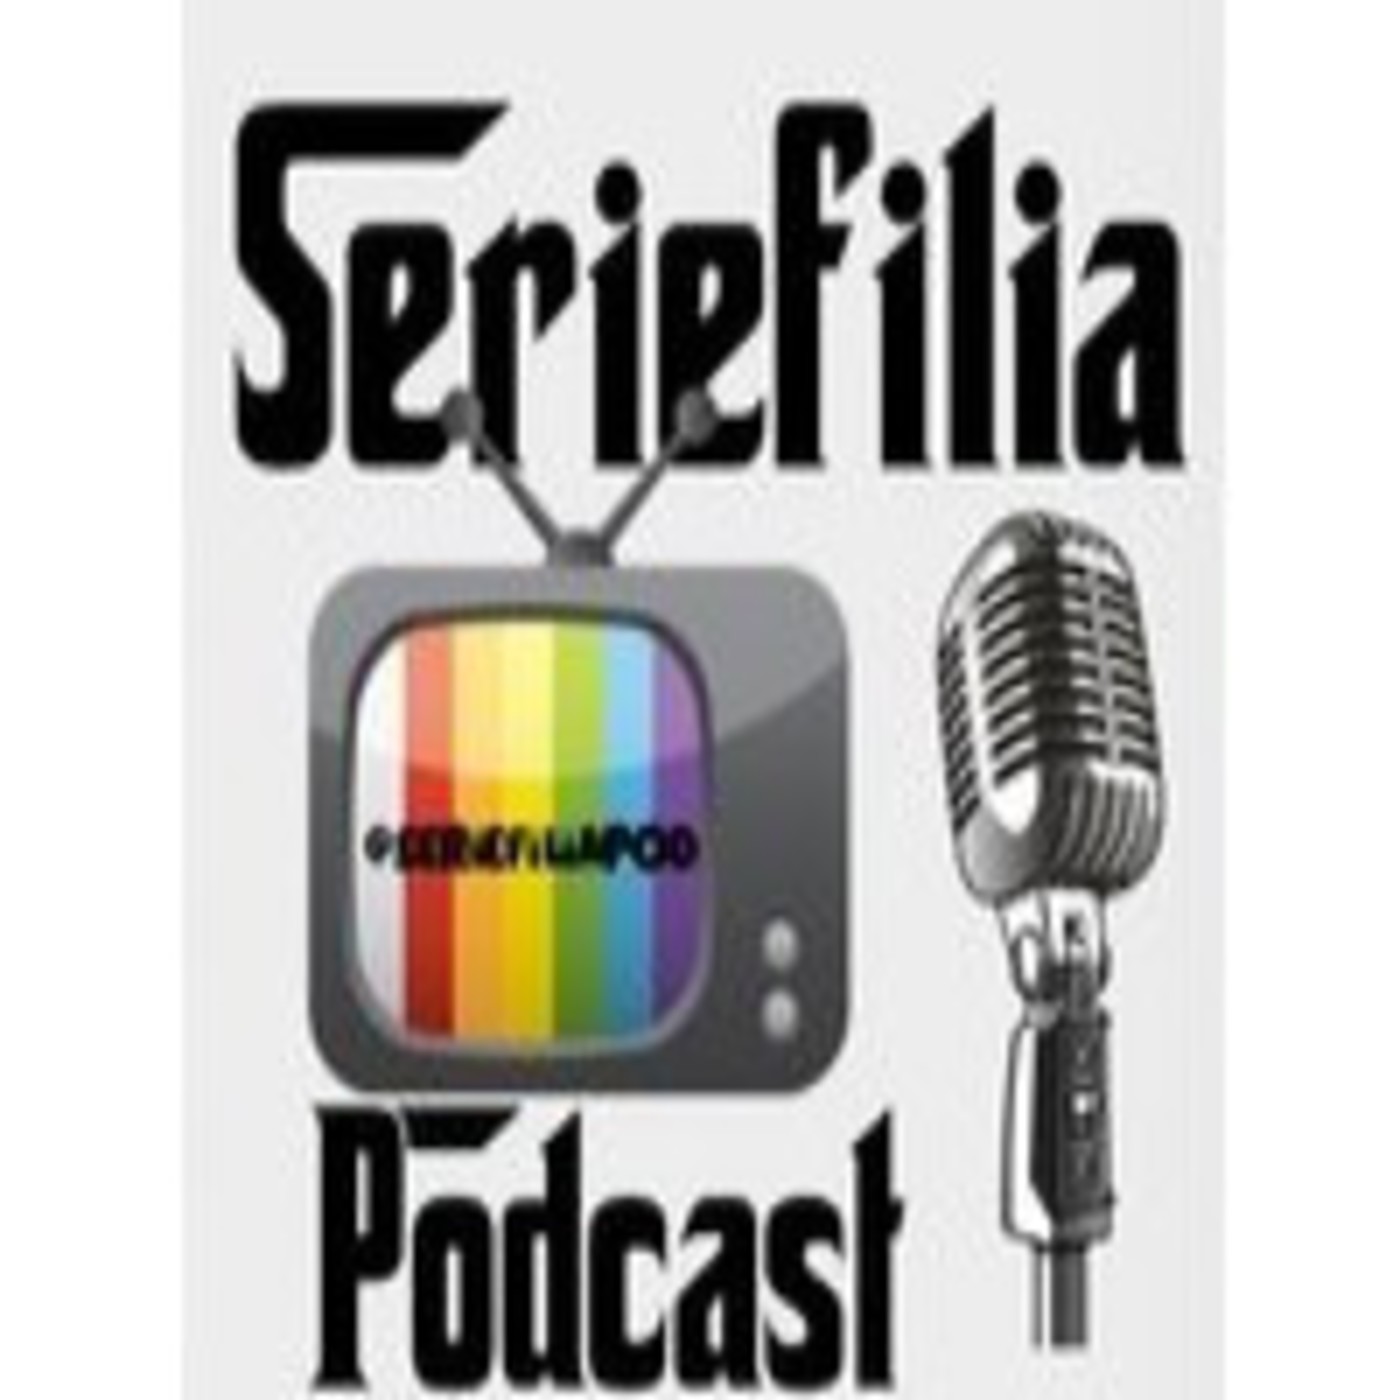 Seriefilia Podcast